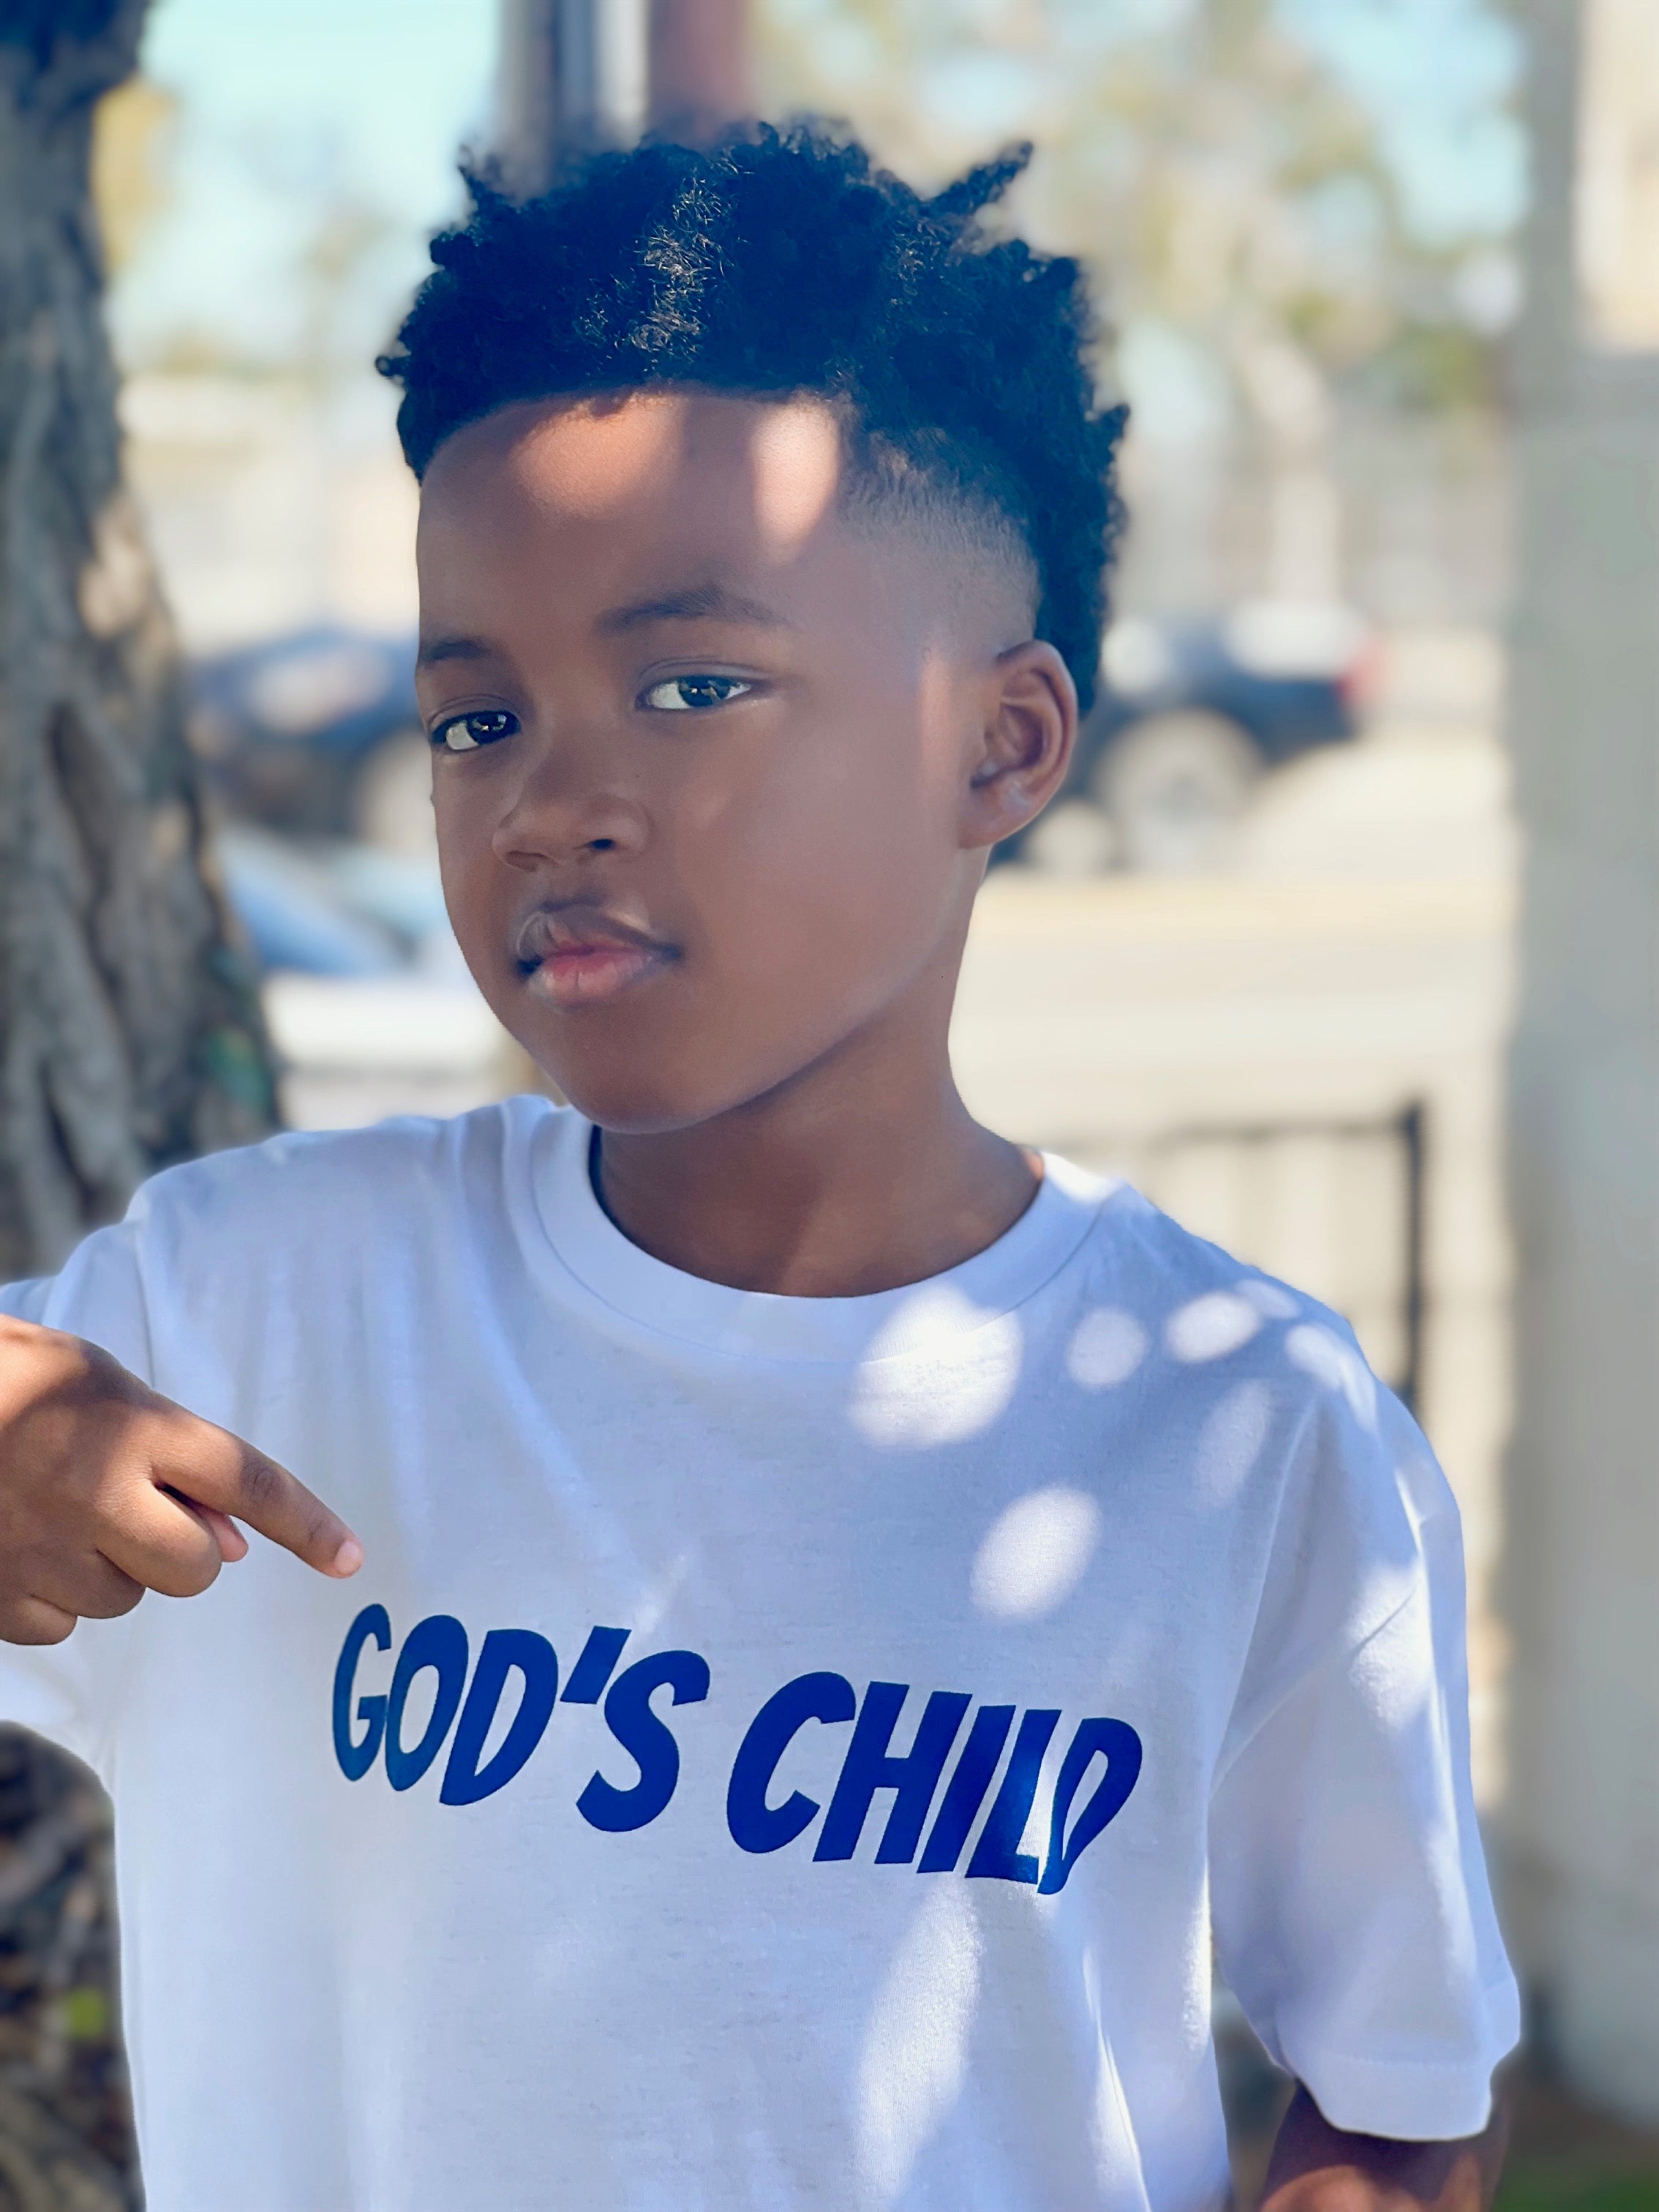 God's Child T-shirt (youth)